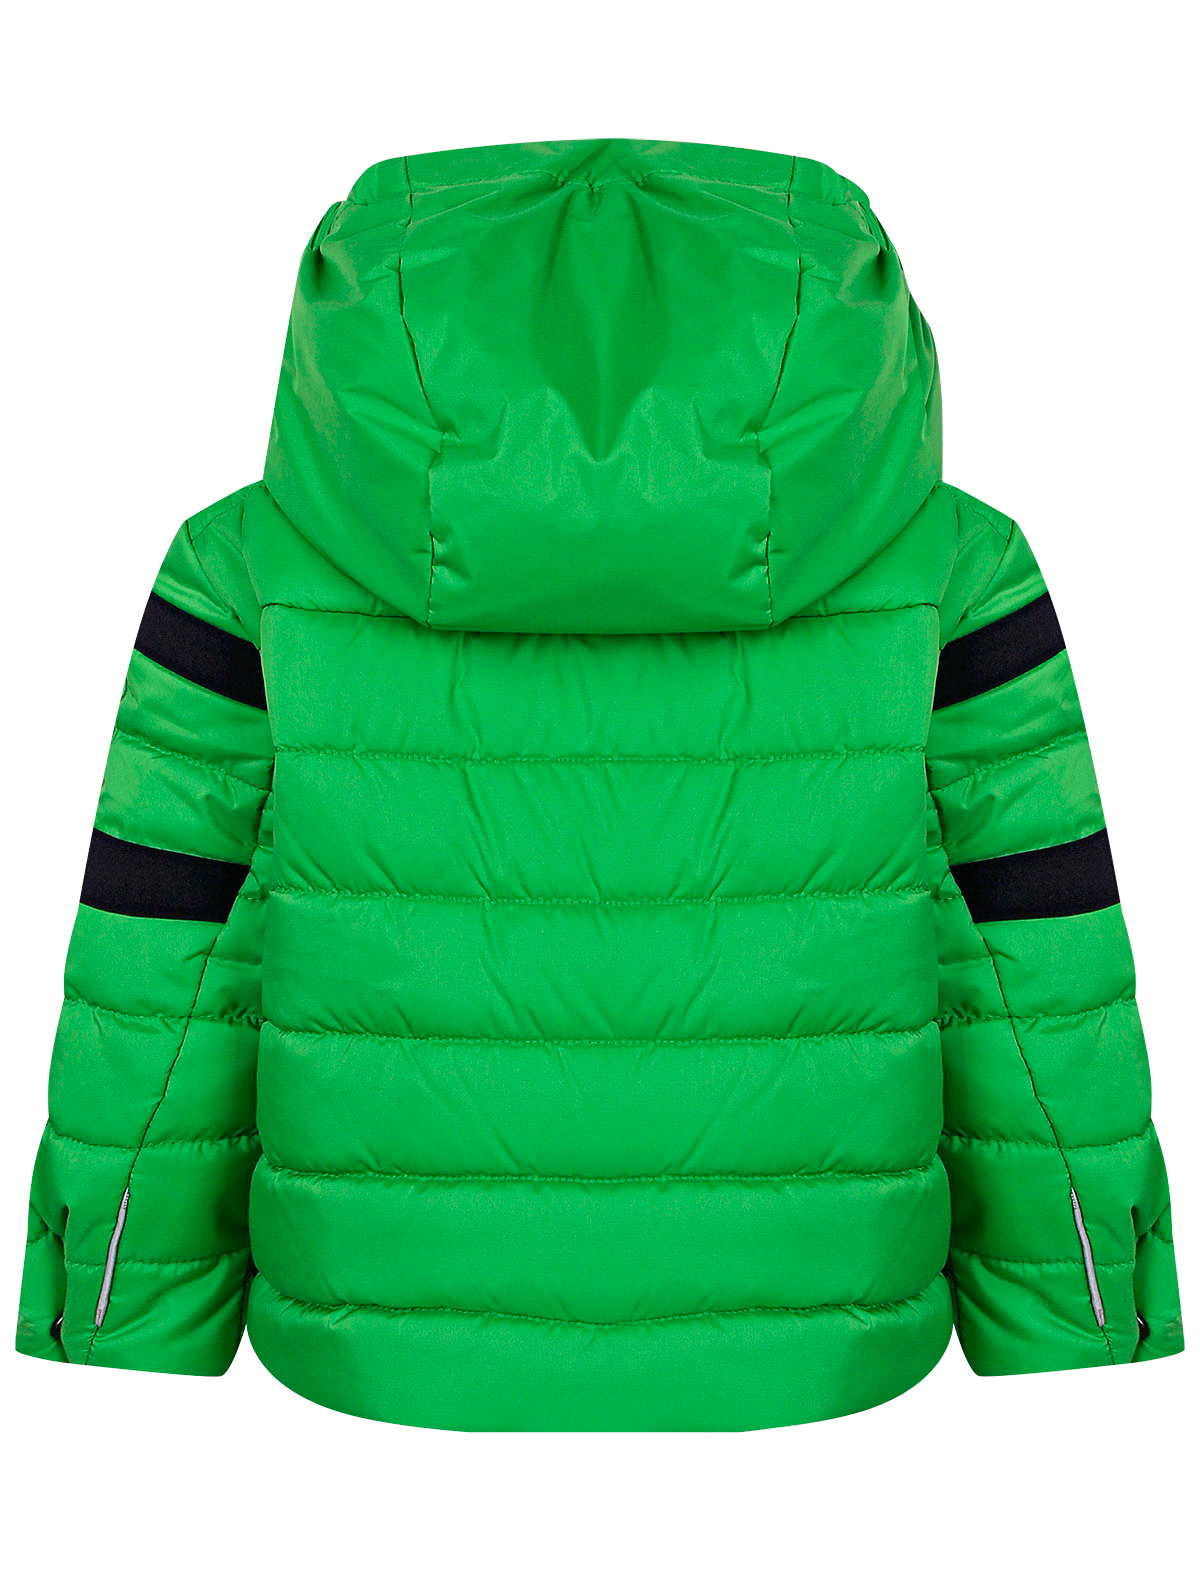 Куртка POIVRE BLANC 2349749, цвет зеленый, размер 3 1074519182105 - фото 3